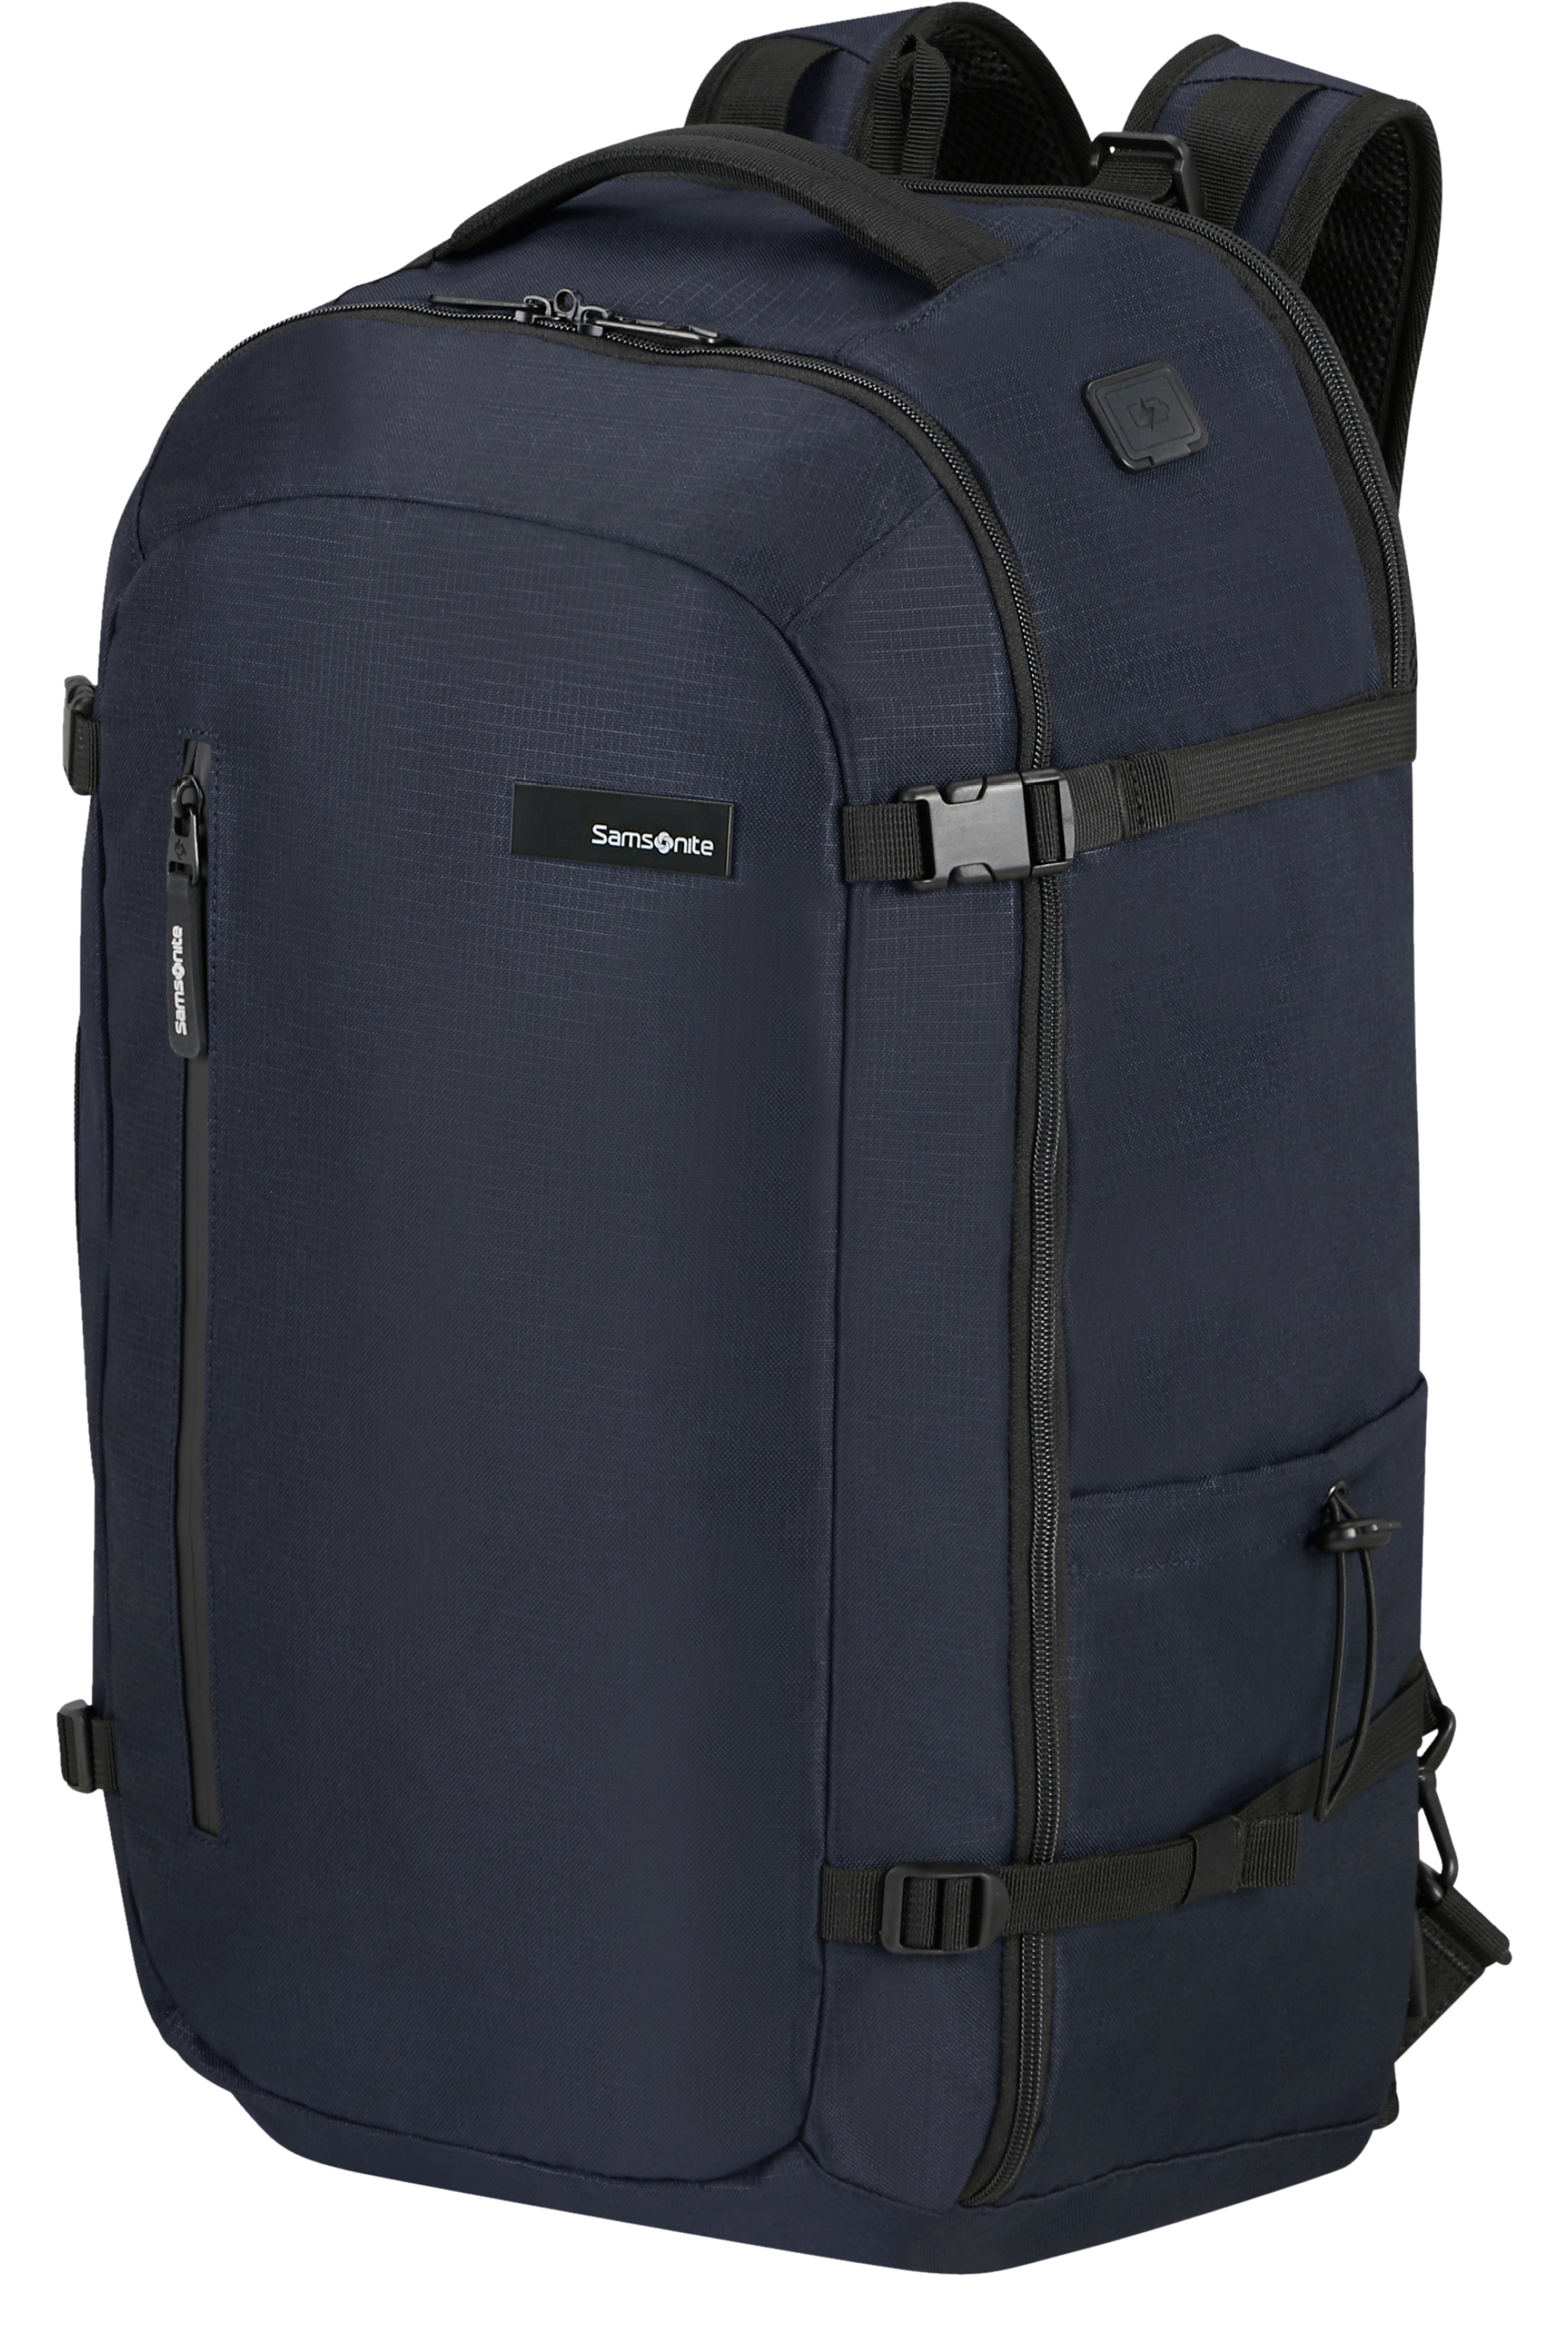 Roader Travel Backpack Small 38 liter